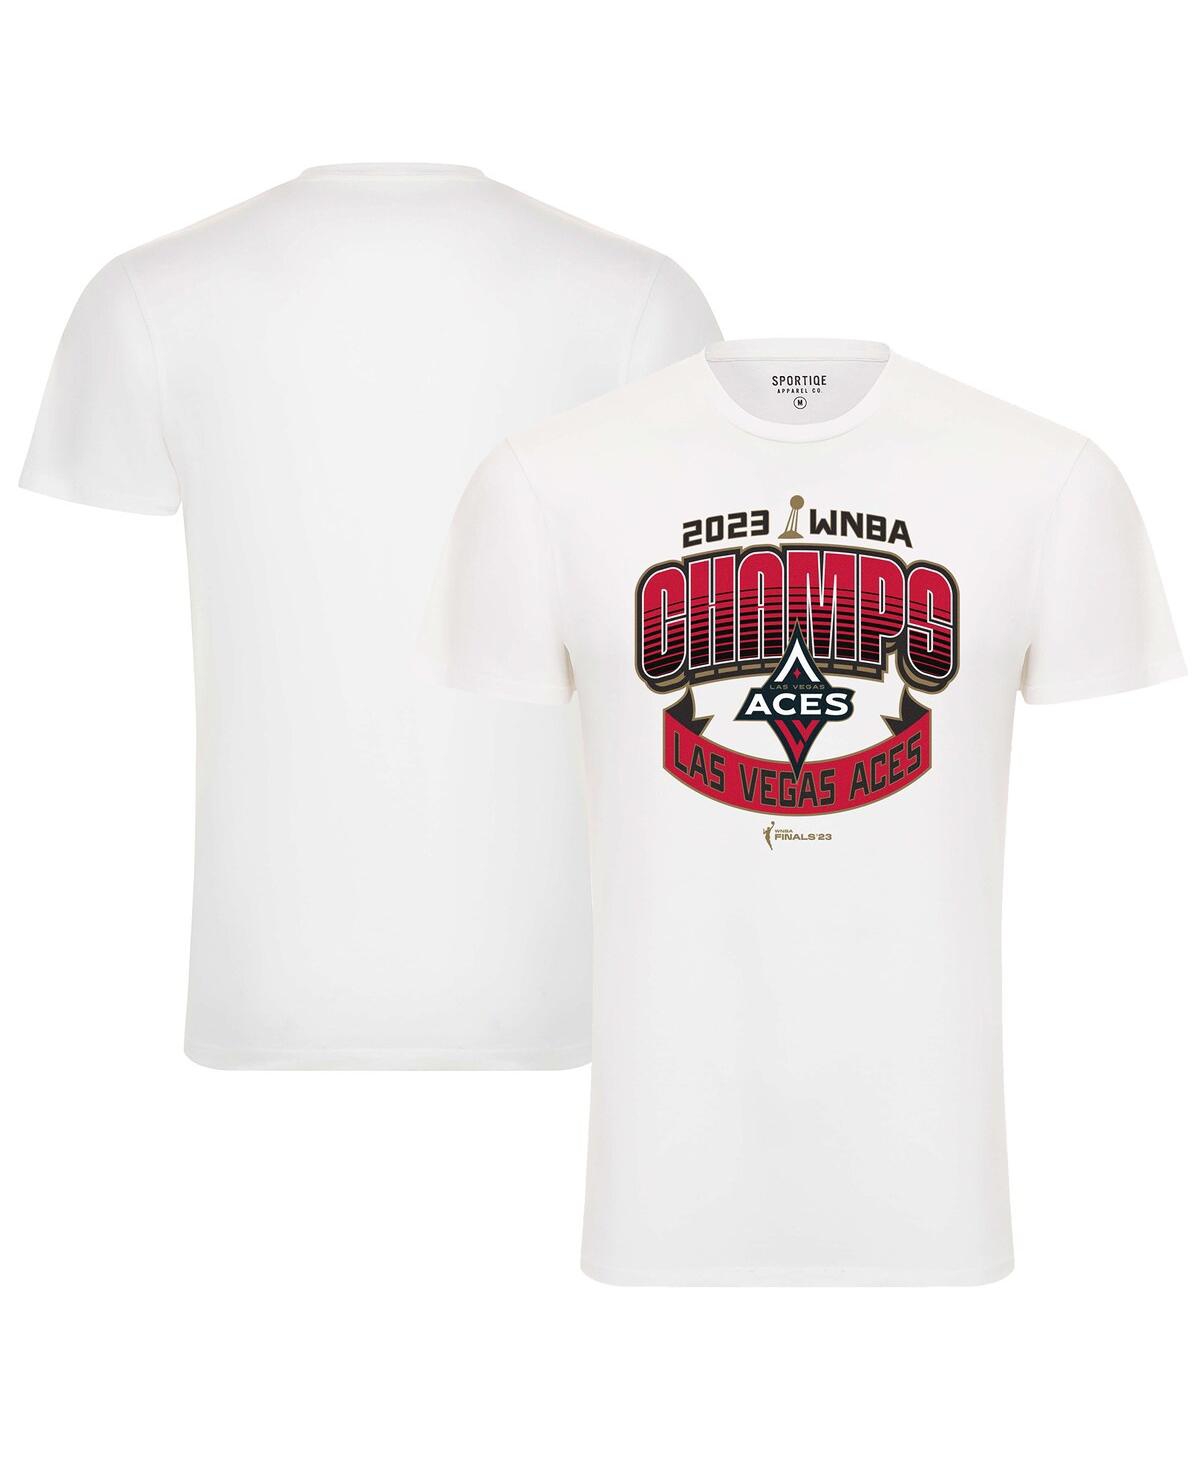 Men's and Women's Sportiqe Cream Las Vegas Aces 2023 Wnba Finals Champions Banner Super Soft Comfy Tri-Blend T-shirt - Cream